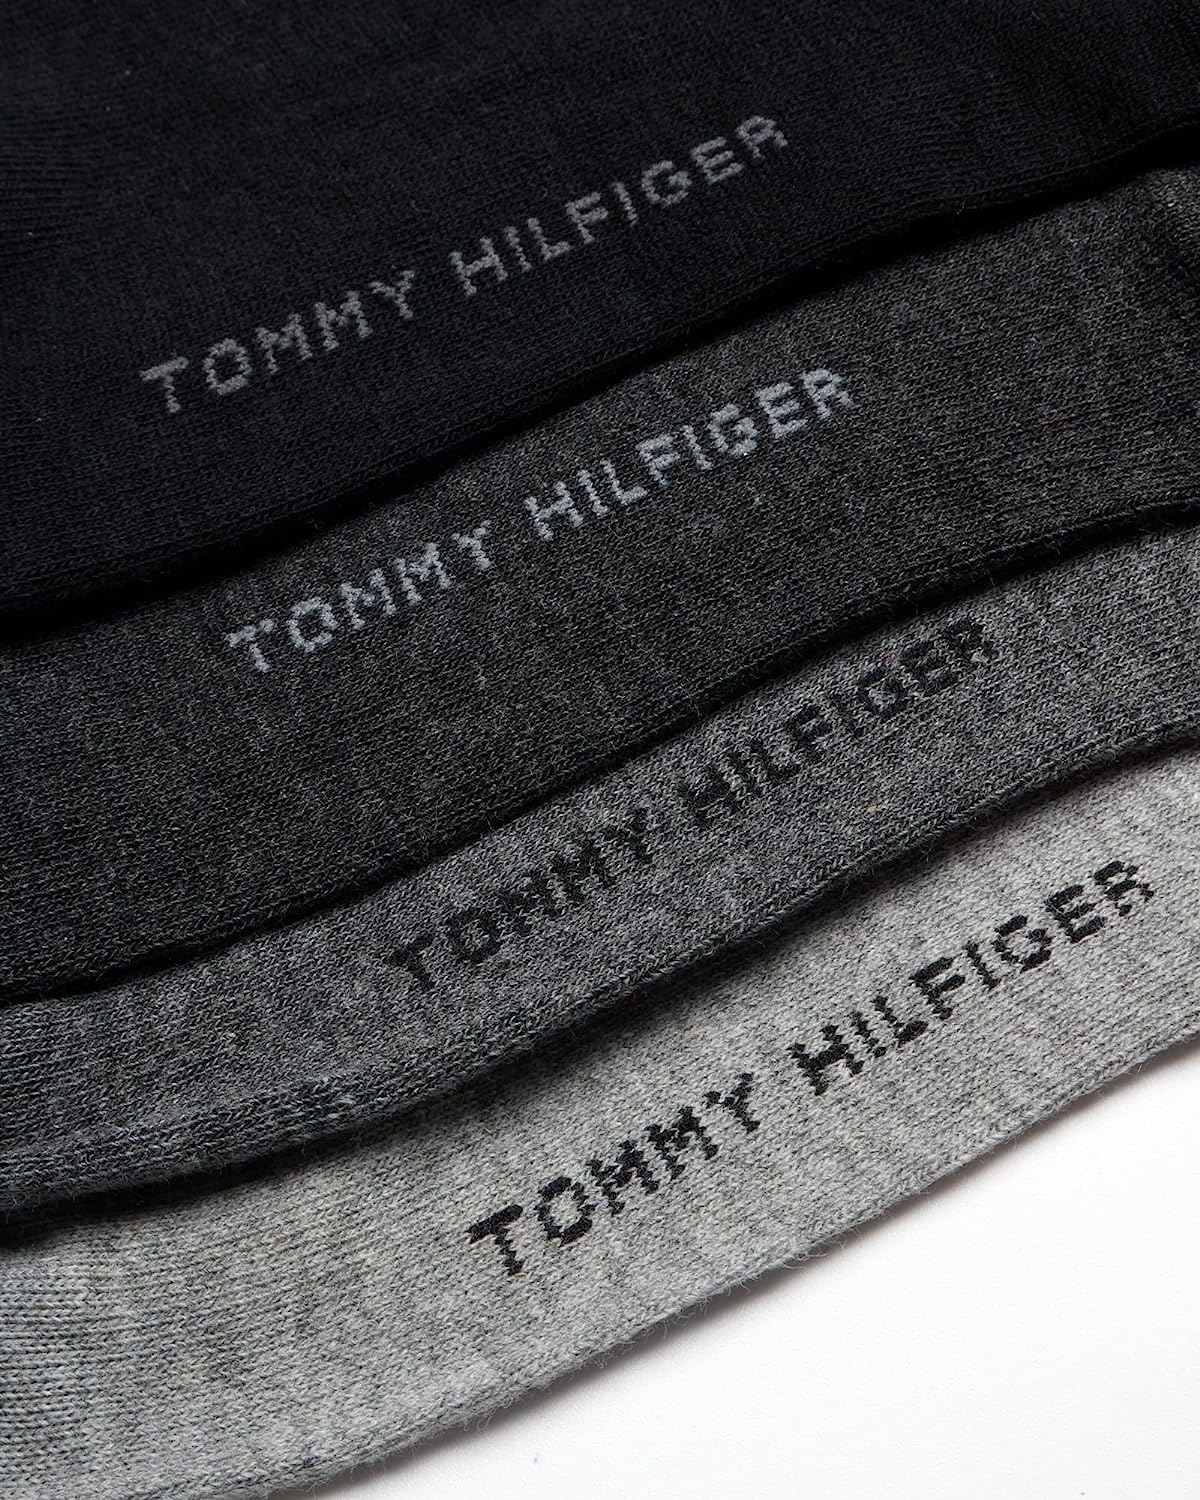 Tommy Hilfiger Men's Dress Socks - Lightweight Comfort Crew Sock (4 pack)